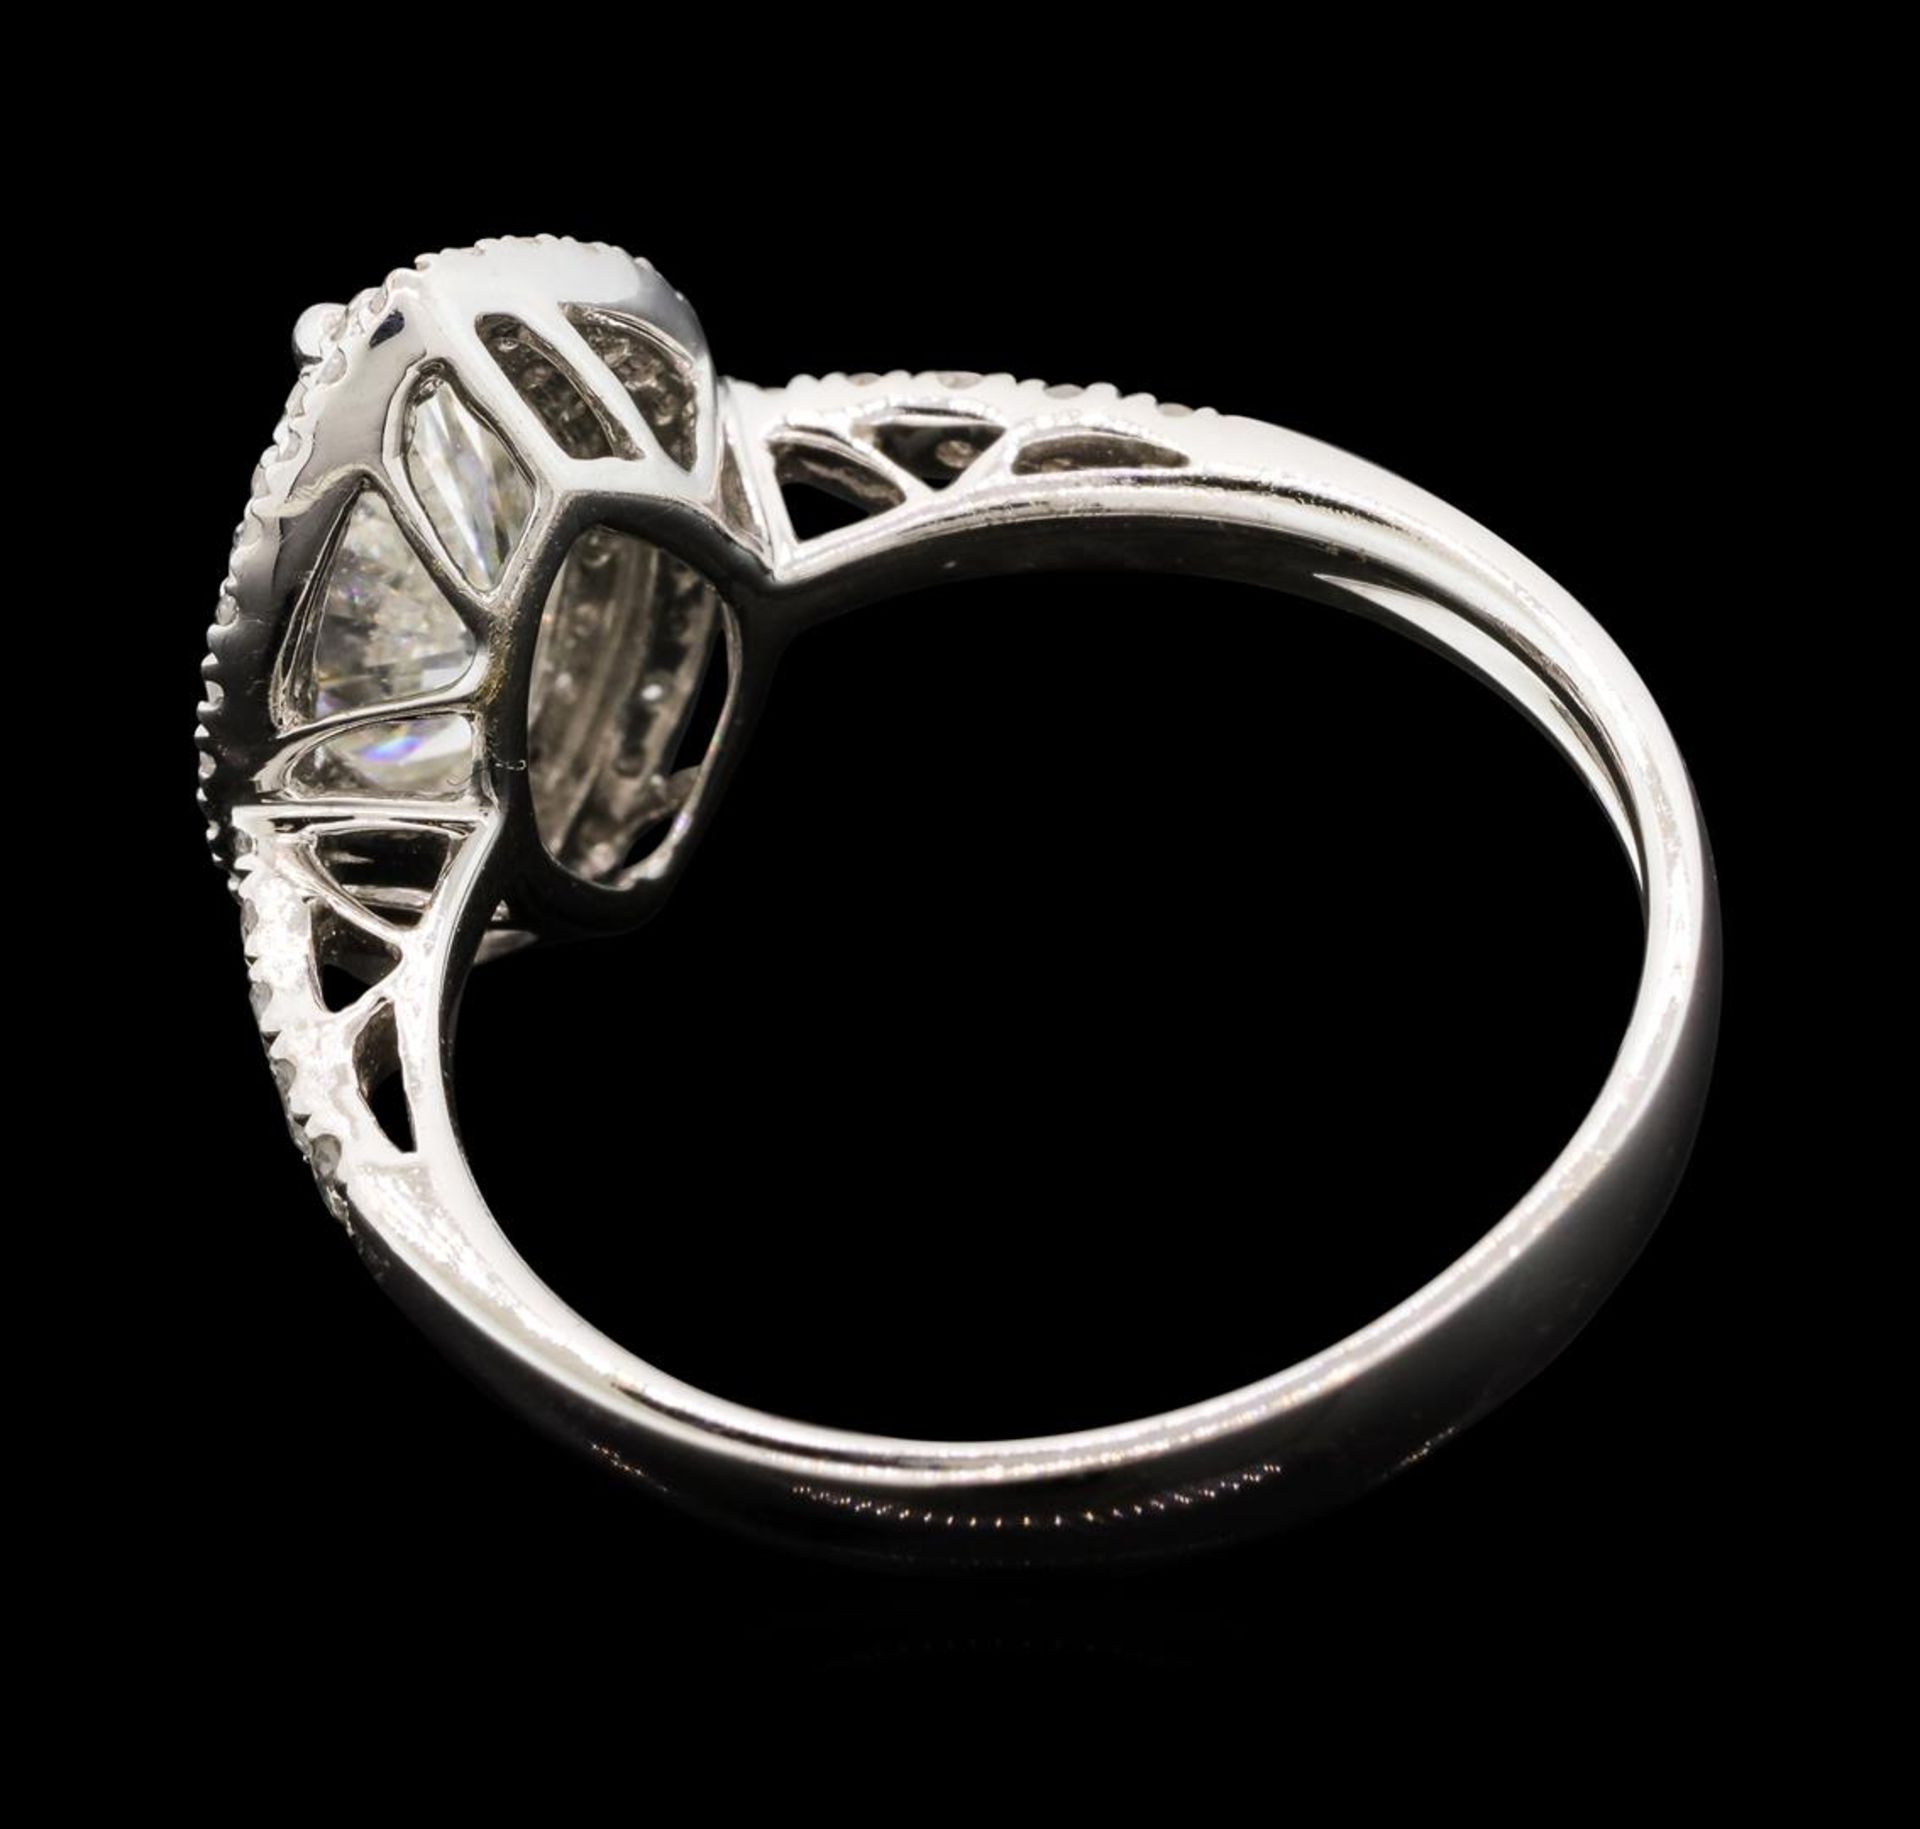 1.55 ctw Diamond Ring - 18KT White Gold - Image 3 of 5